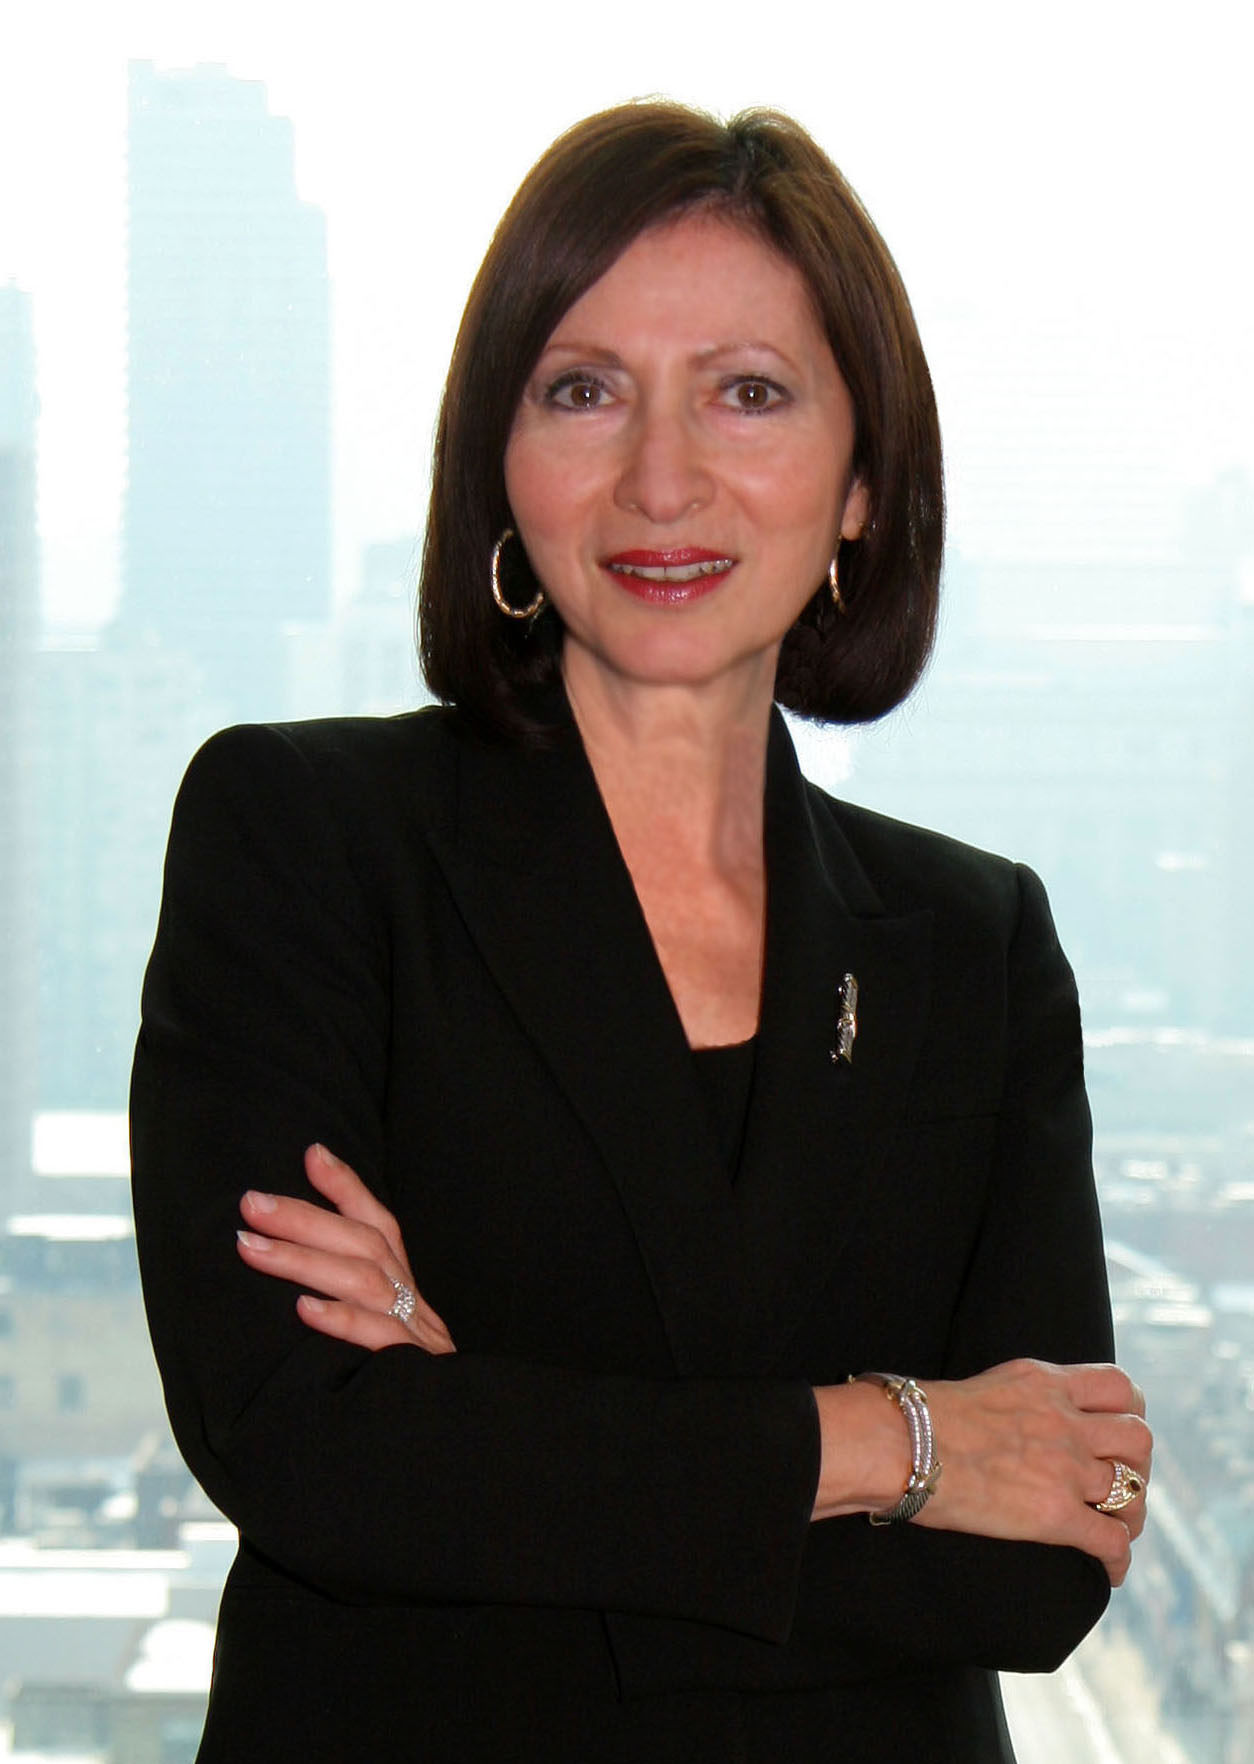 Ann Cavoukian, Ph.D